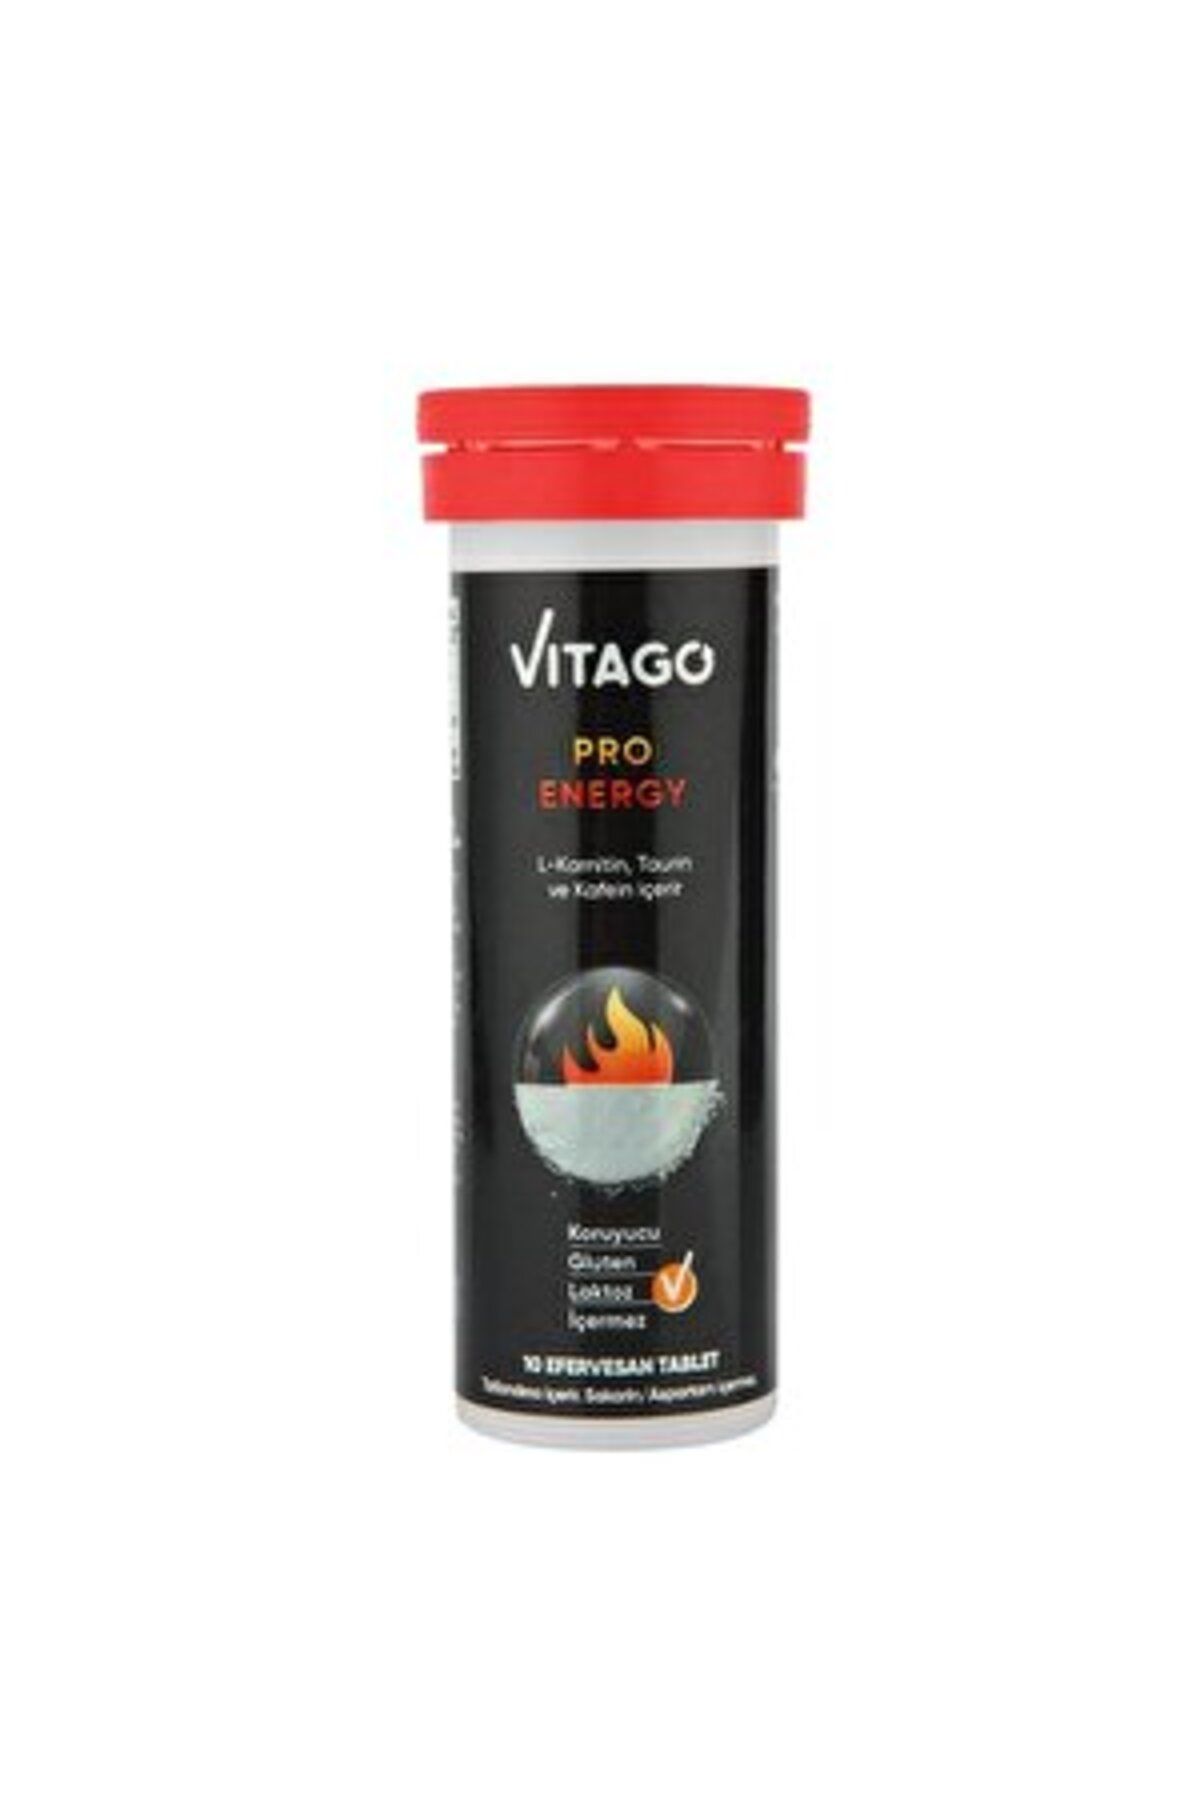 Vitago Energy L-Karnitin, Taurin, Kafein İçeren Efervesan Tablet 10'lu ( 2 ADET )